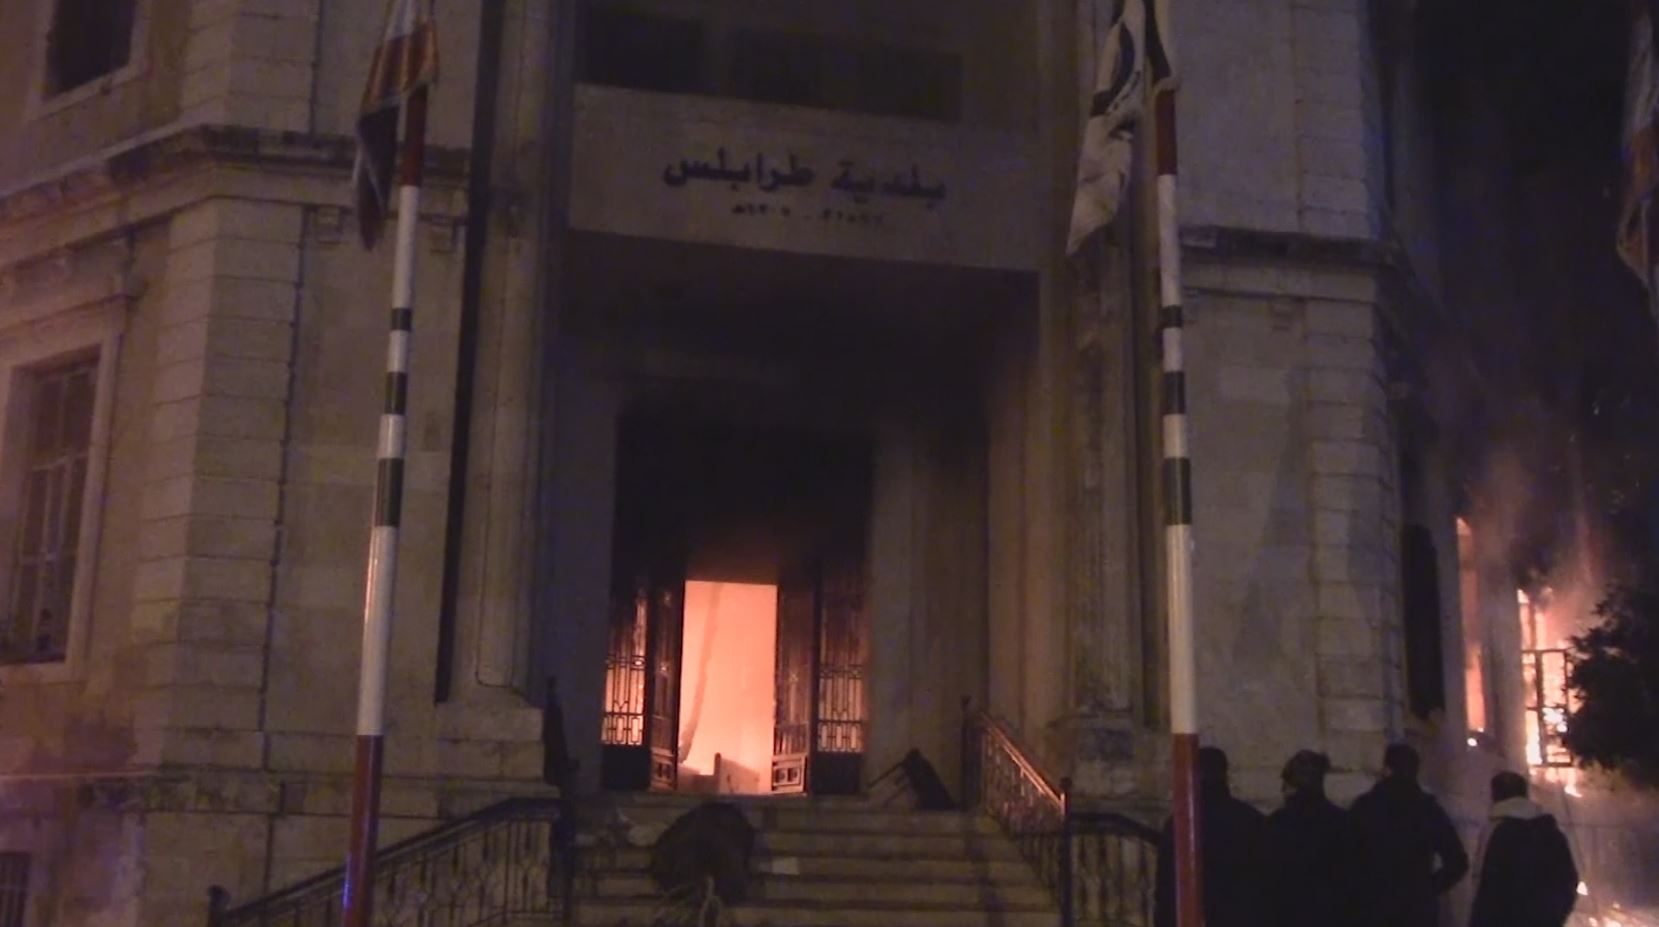 protestors set fire to several government buildings at tripoli in lebanon